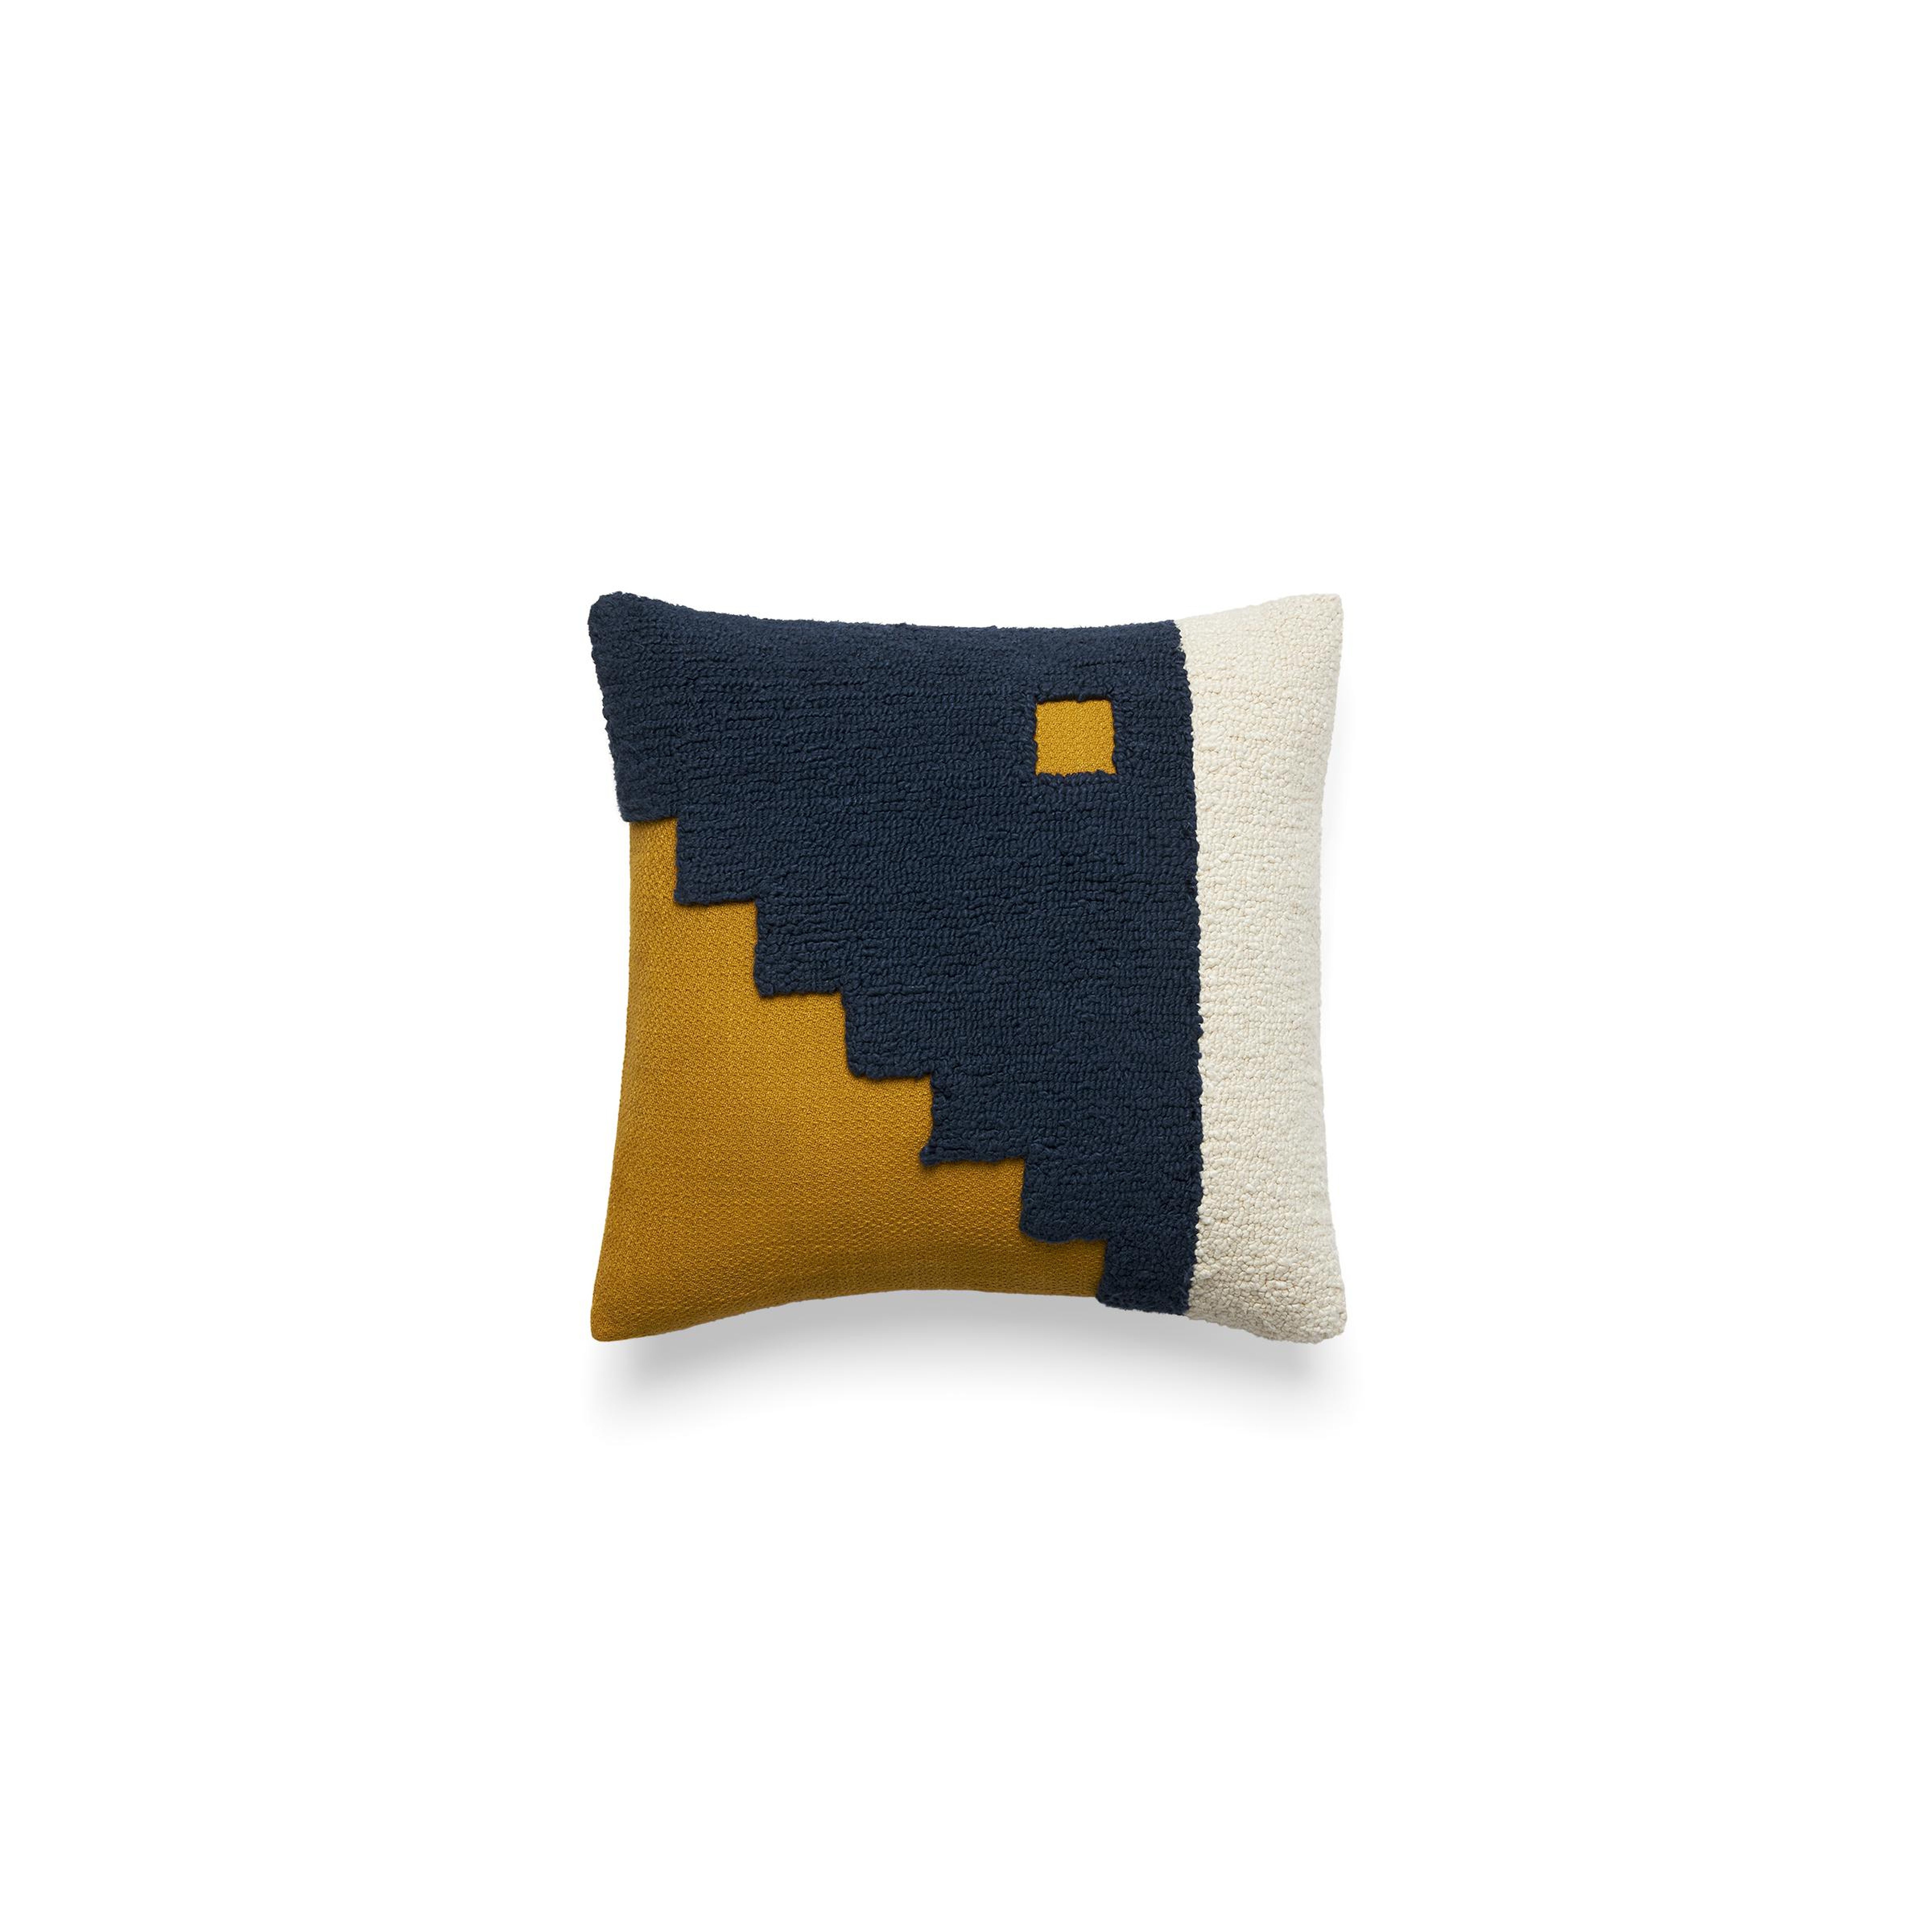 Pixel Pillow Cover in Multi - Burrow